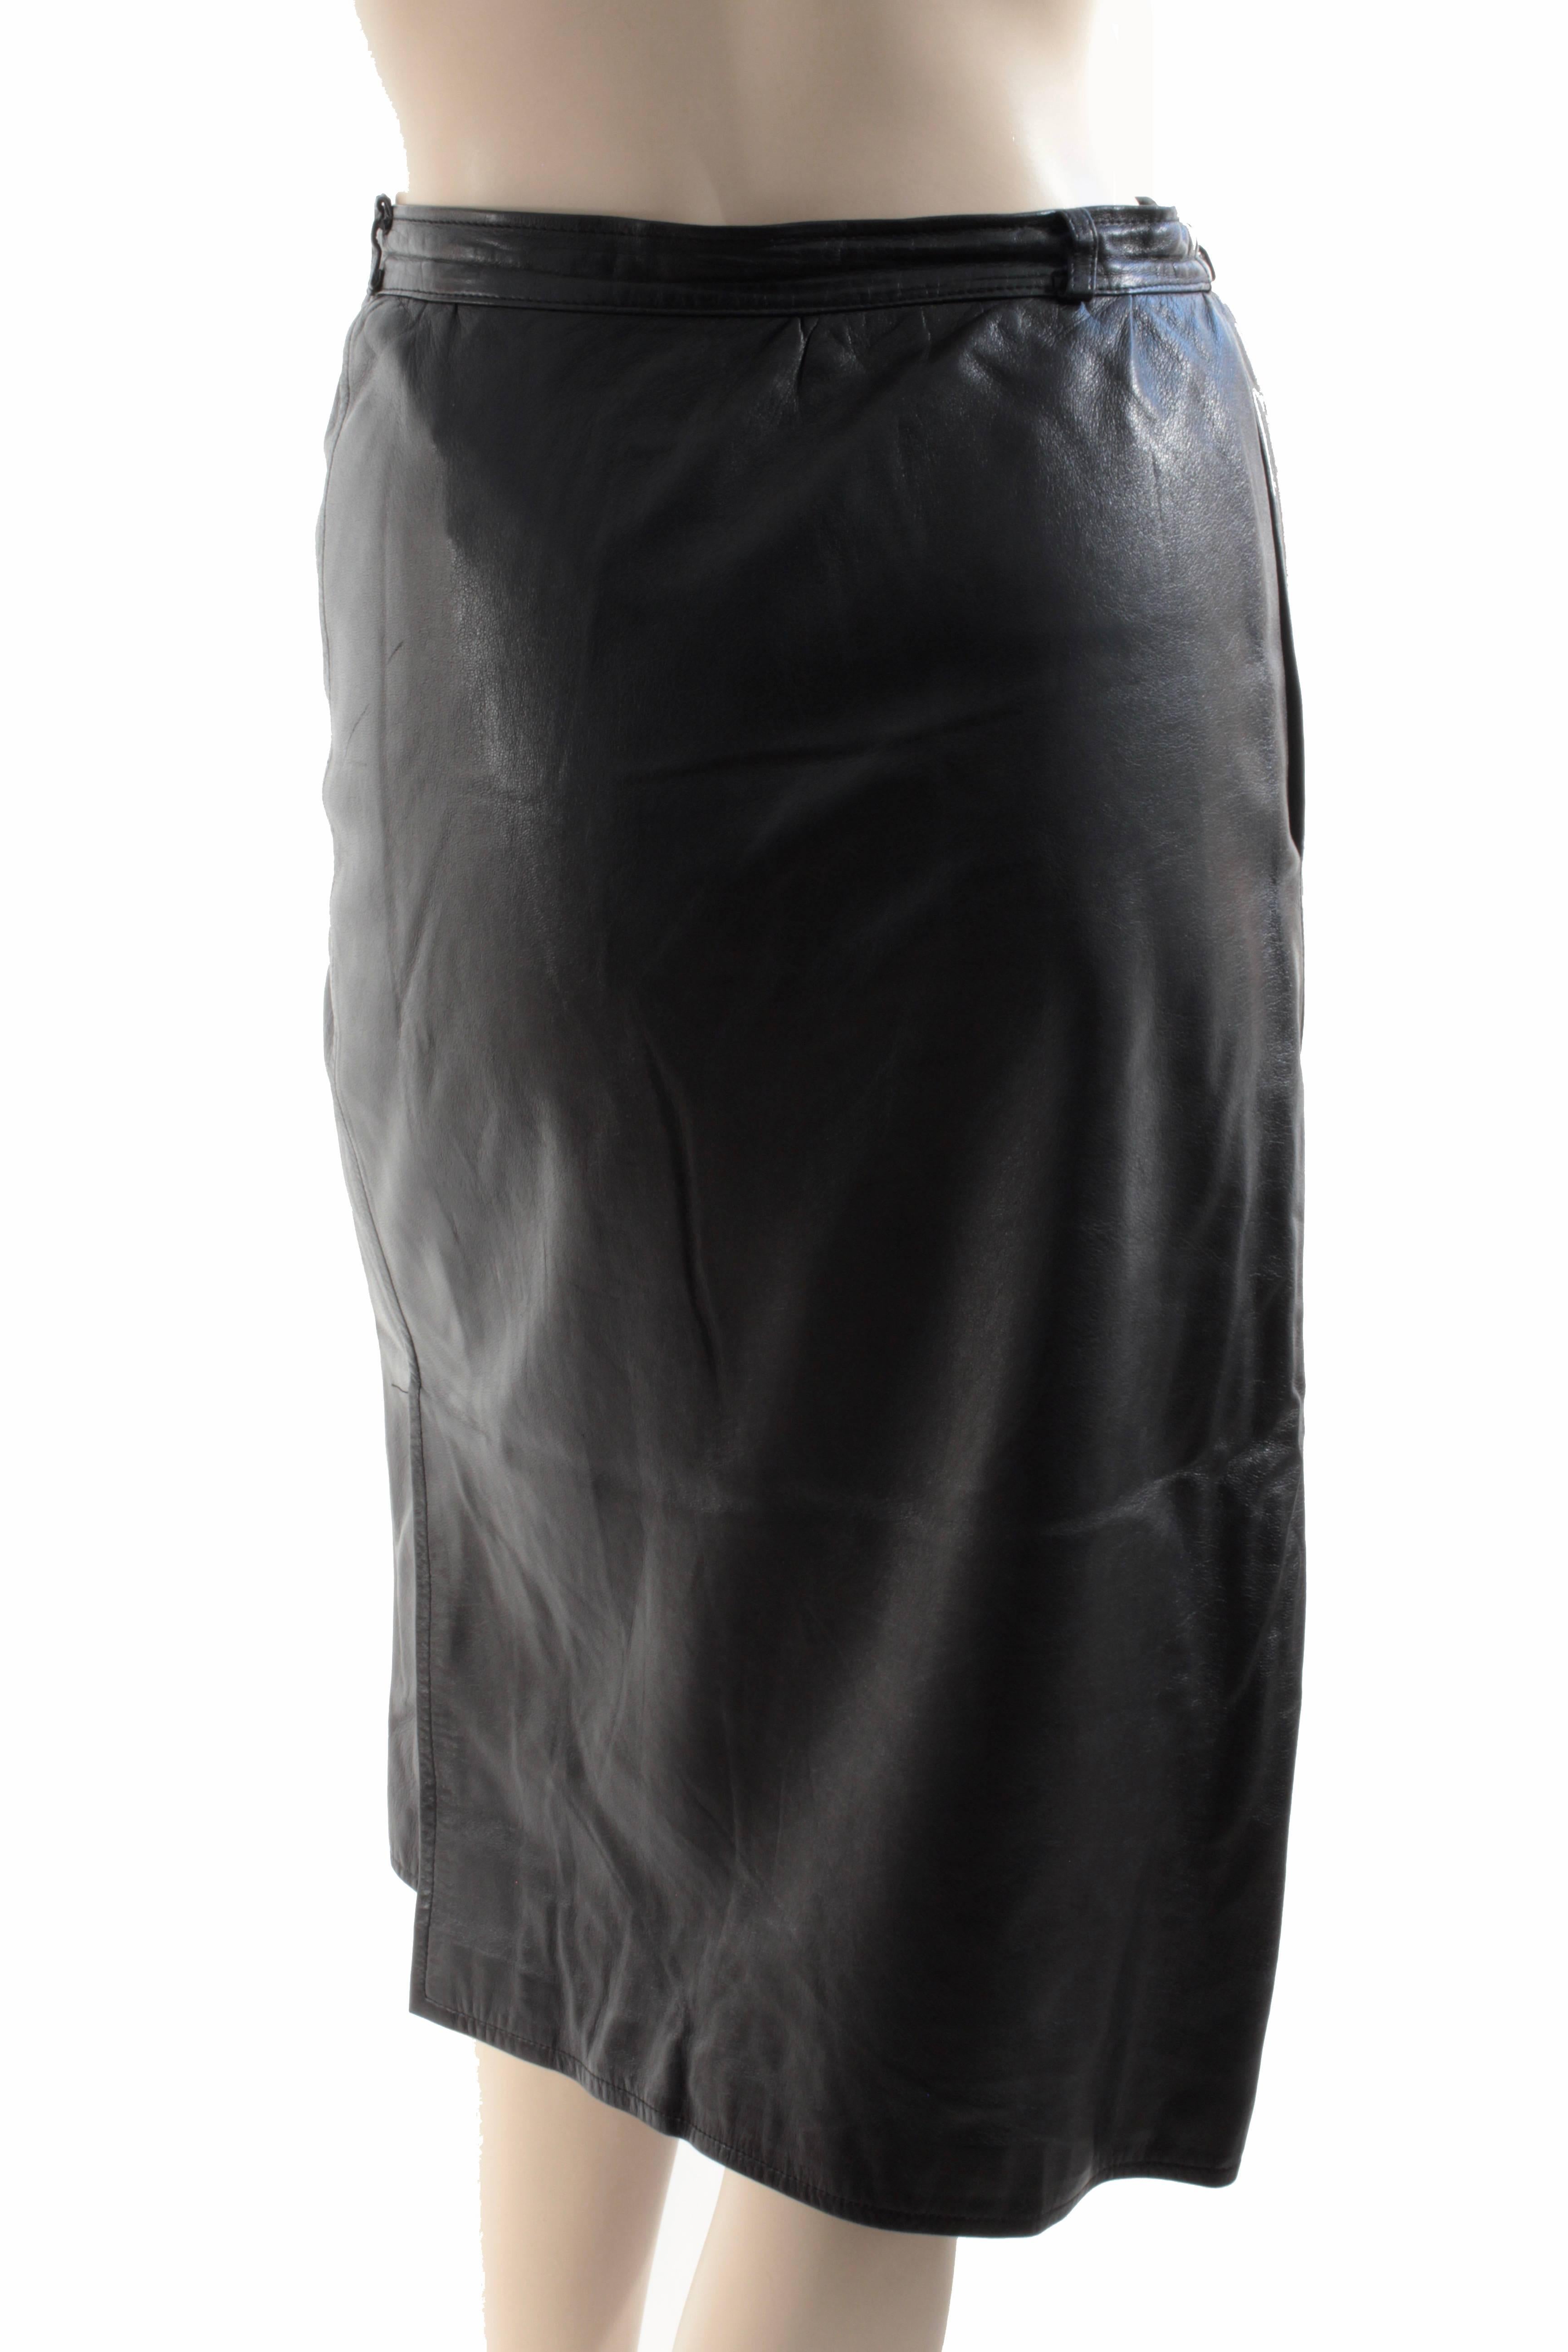 Yves Saint Laurent Black Leather Wrap Skirt YSL Rive Gauche sz 40 1